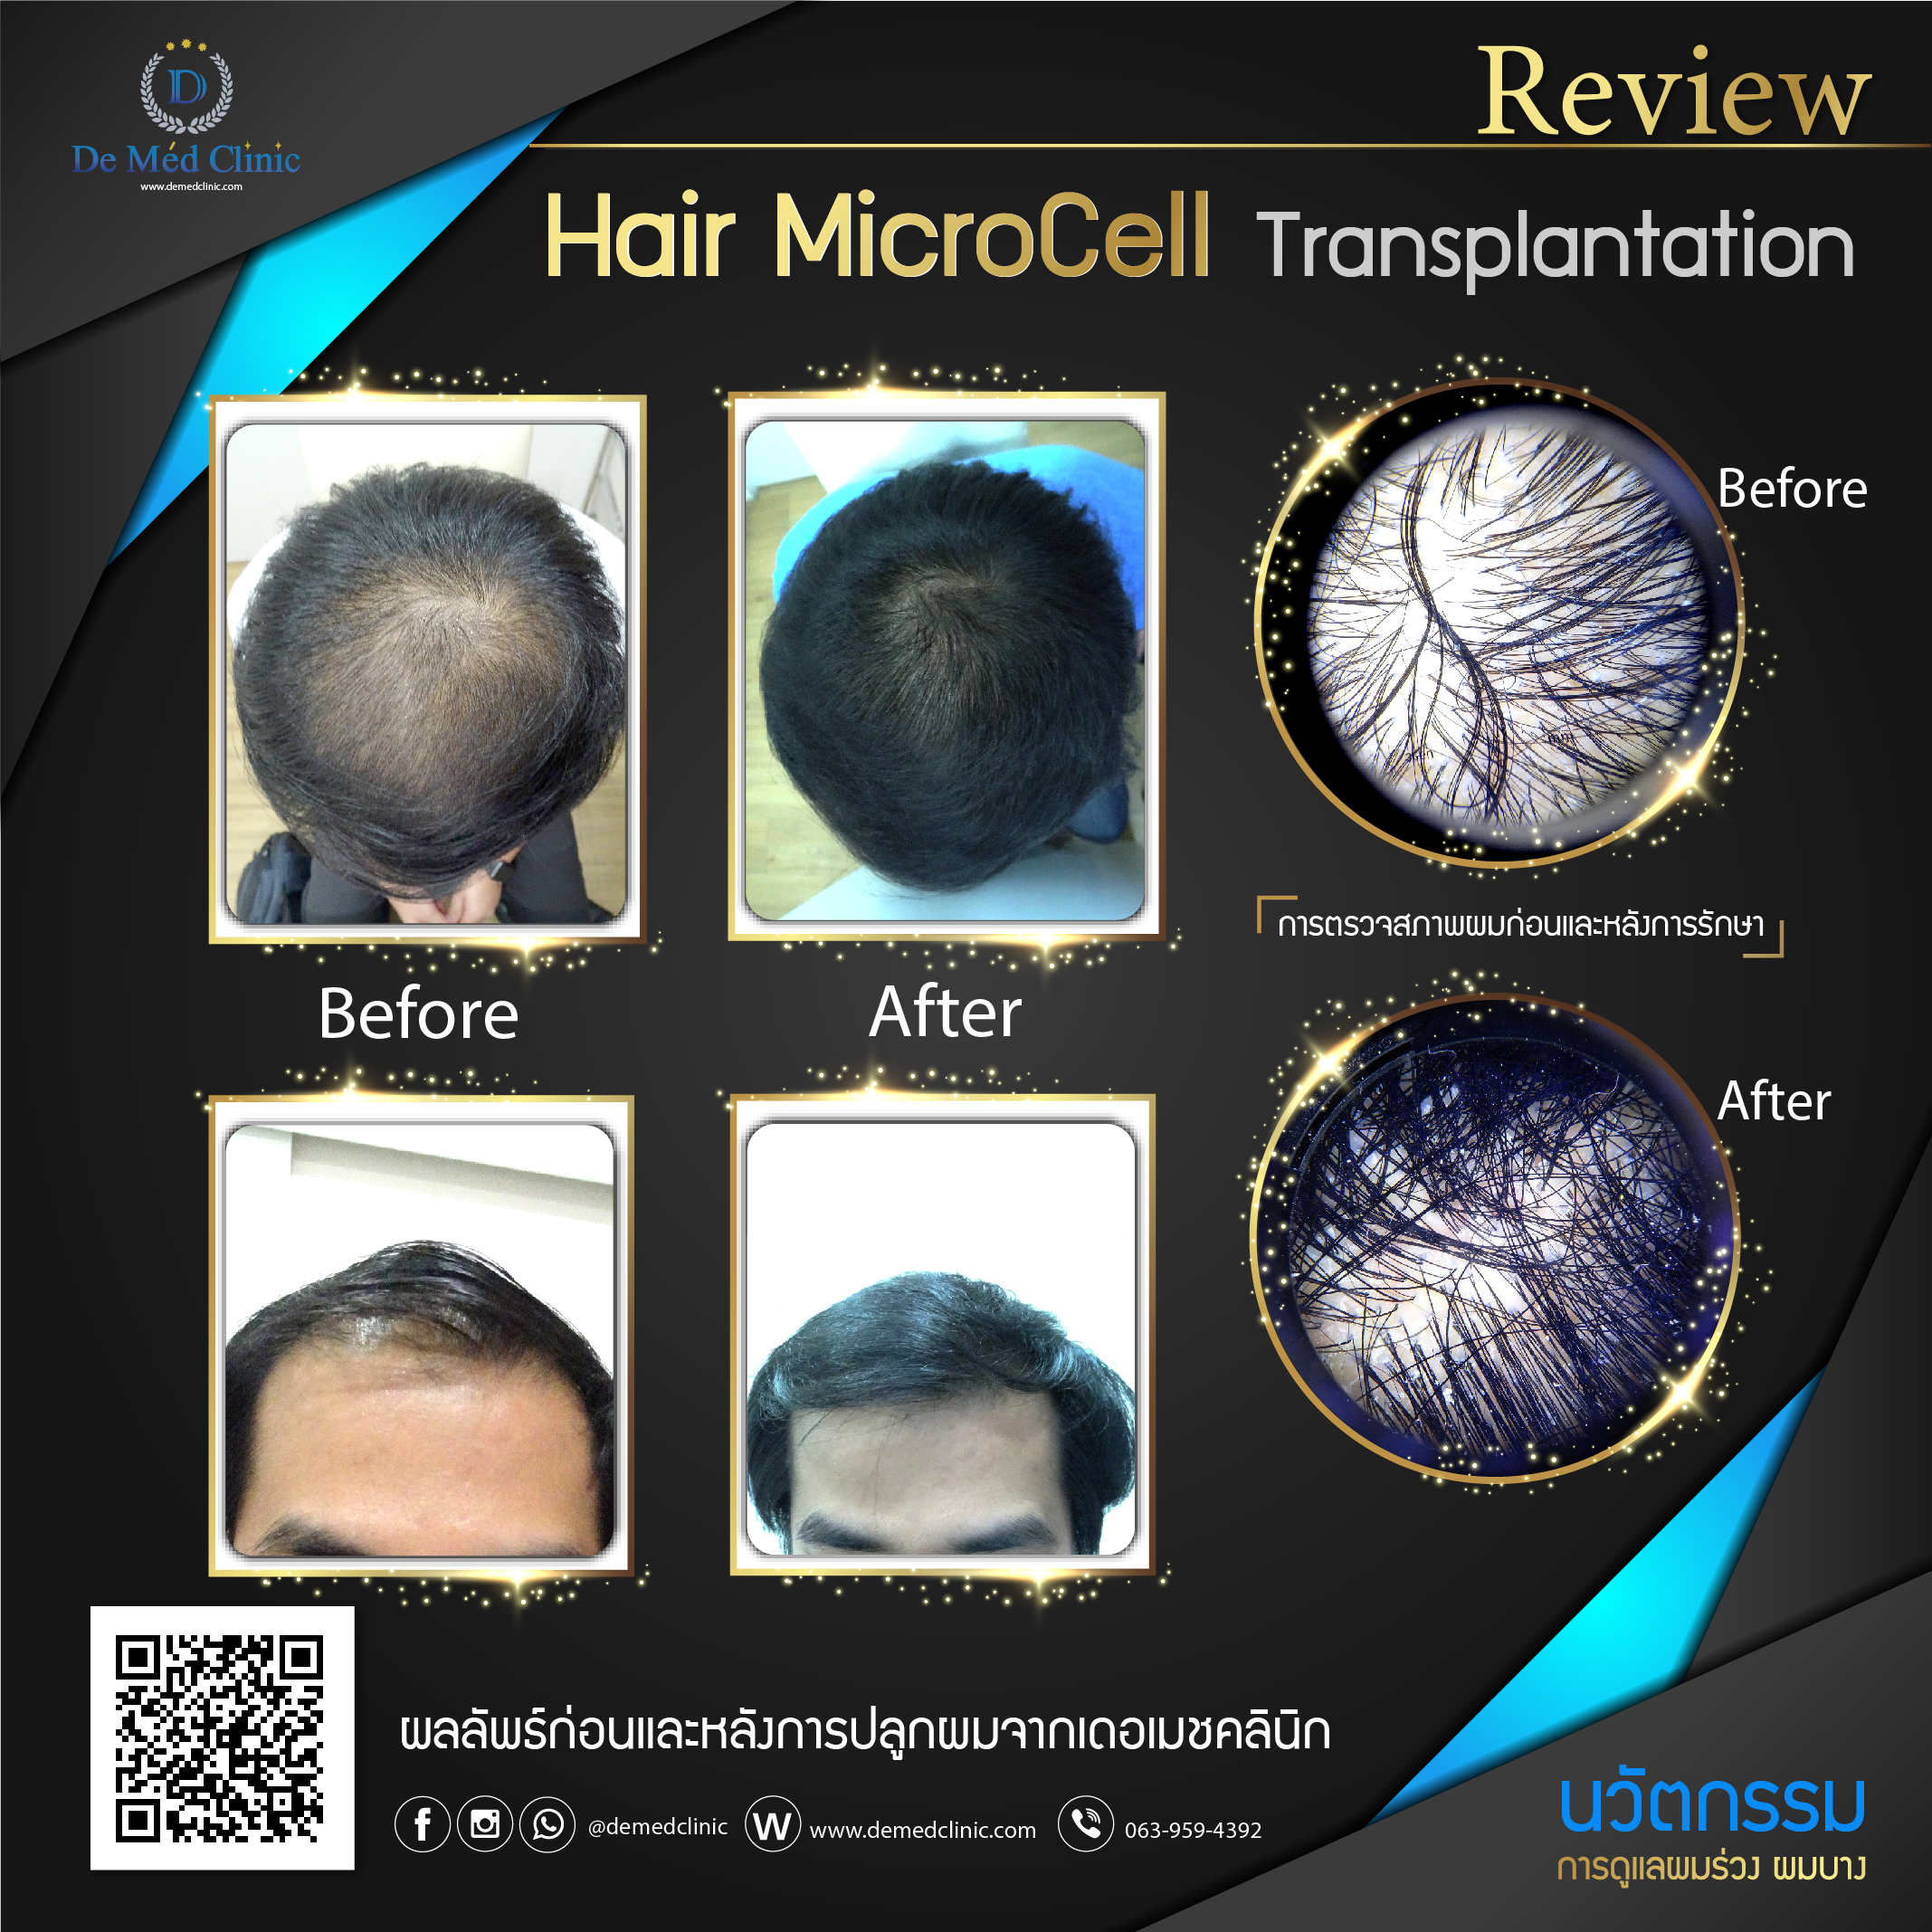  Hair MicroCell Transplantation (HMT)